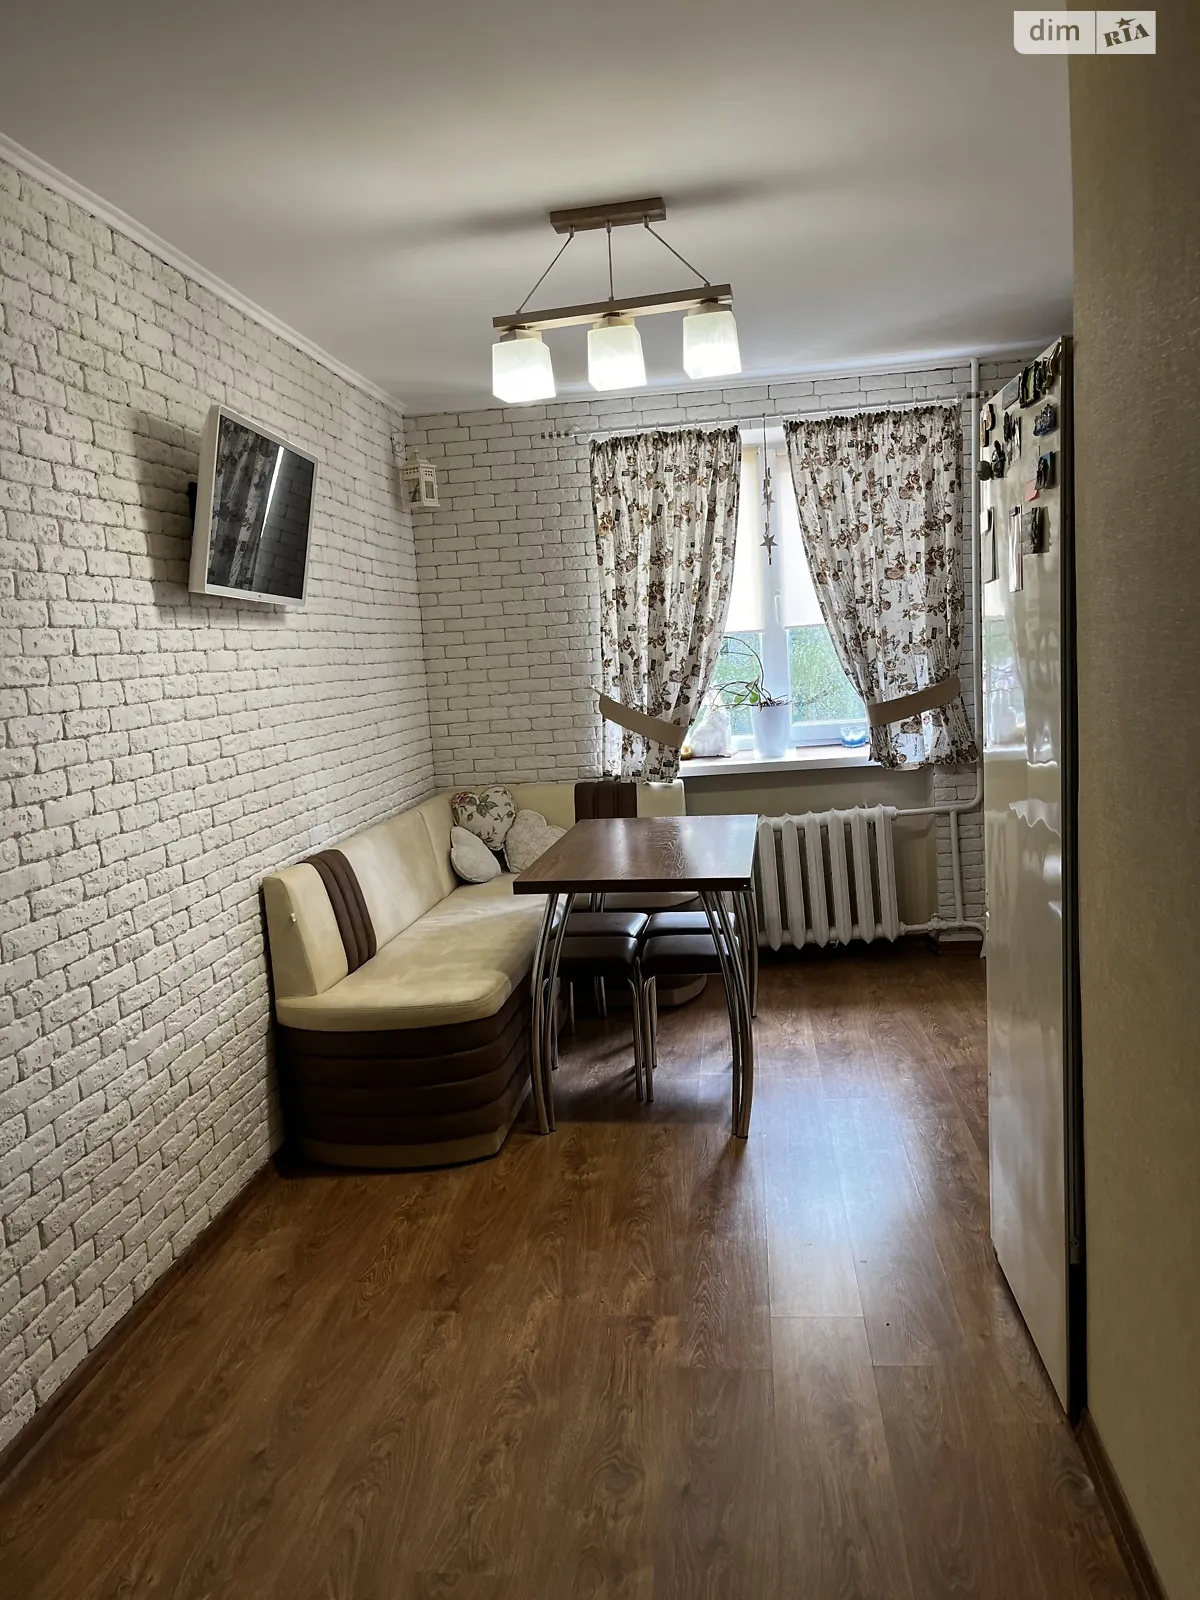 2-кімнатна квартира 58 кв. м у Луцьку, цена: 55000 $